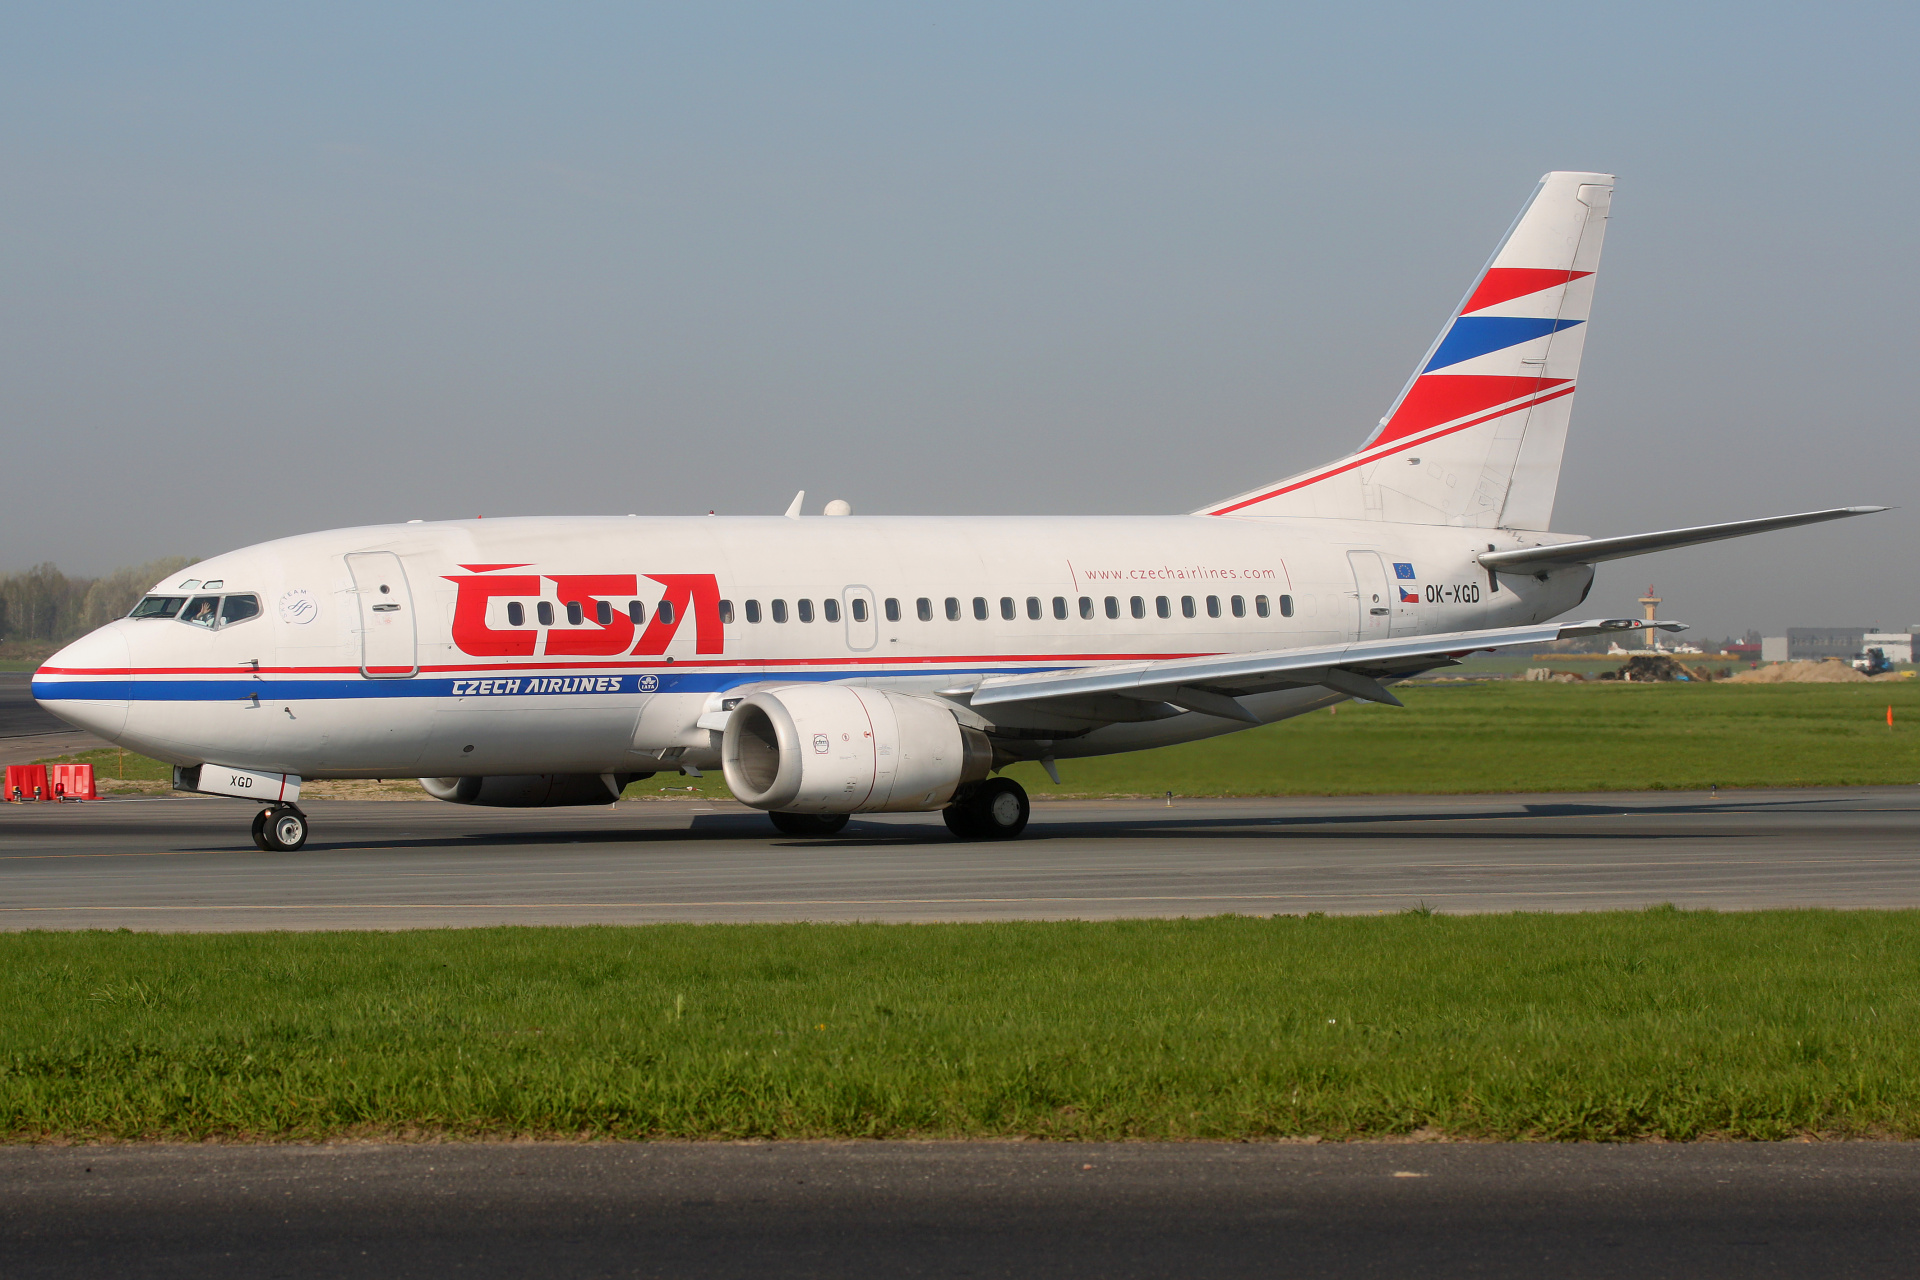 OK-XGD (Aircraft » EPWA Spotting » Boeing 737-500 » CSA Czech Airlines)